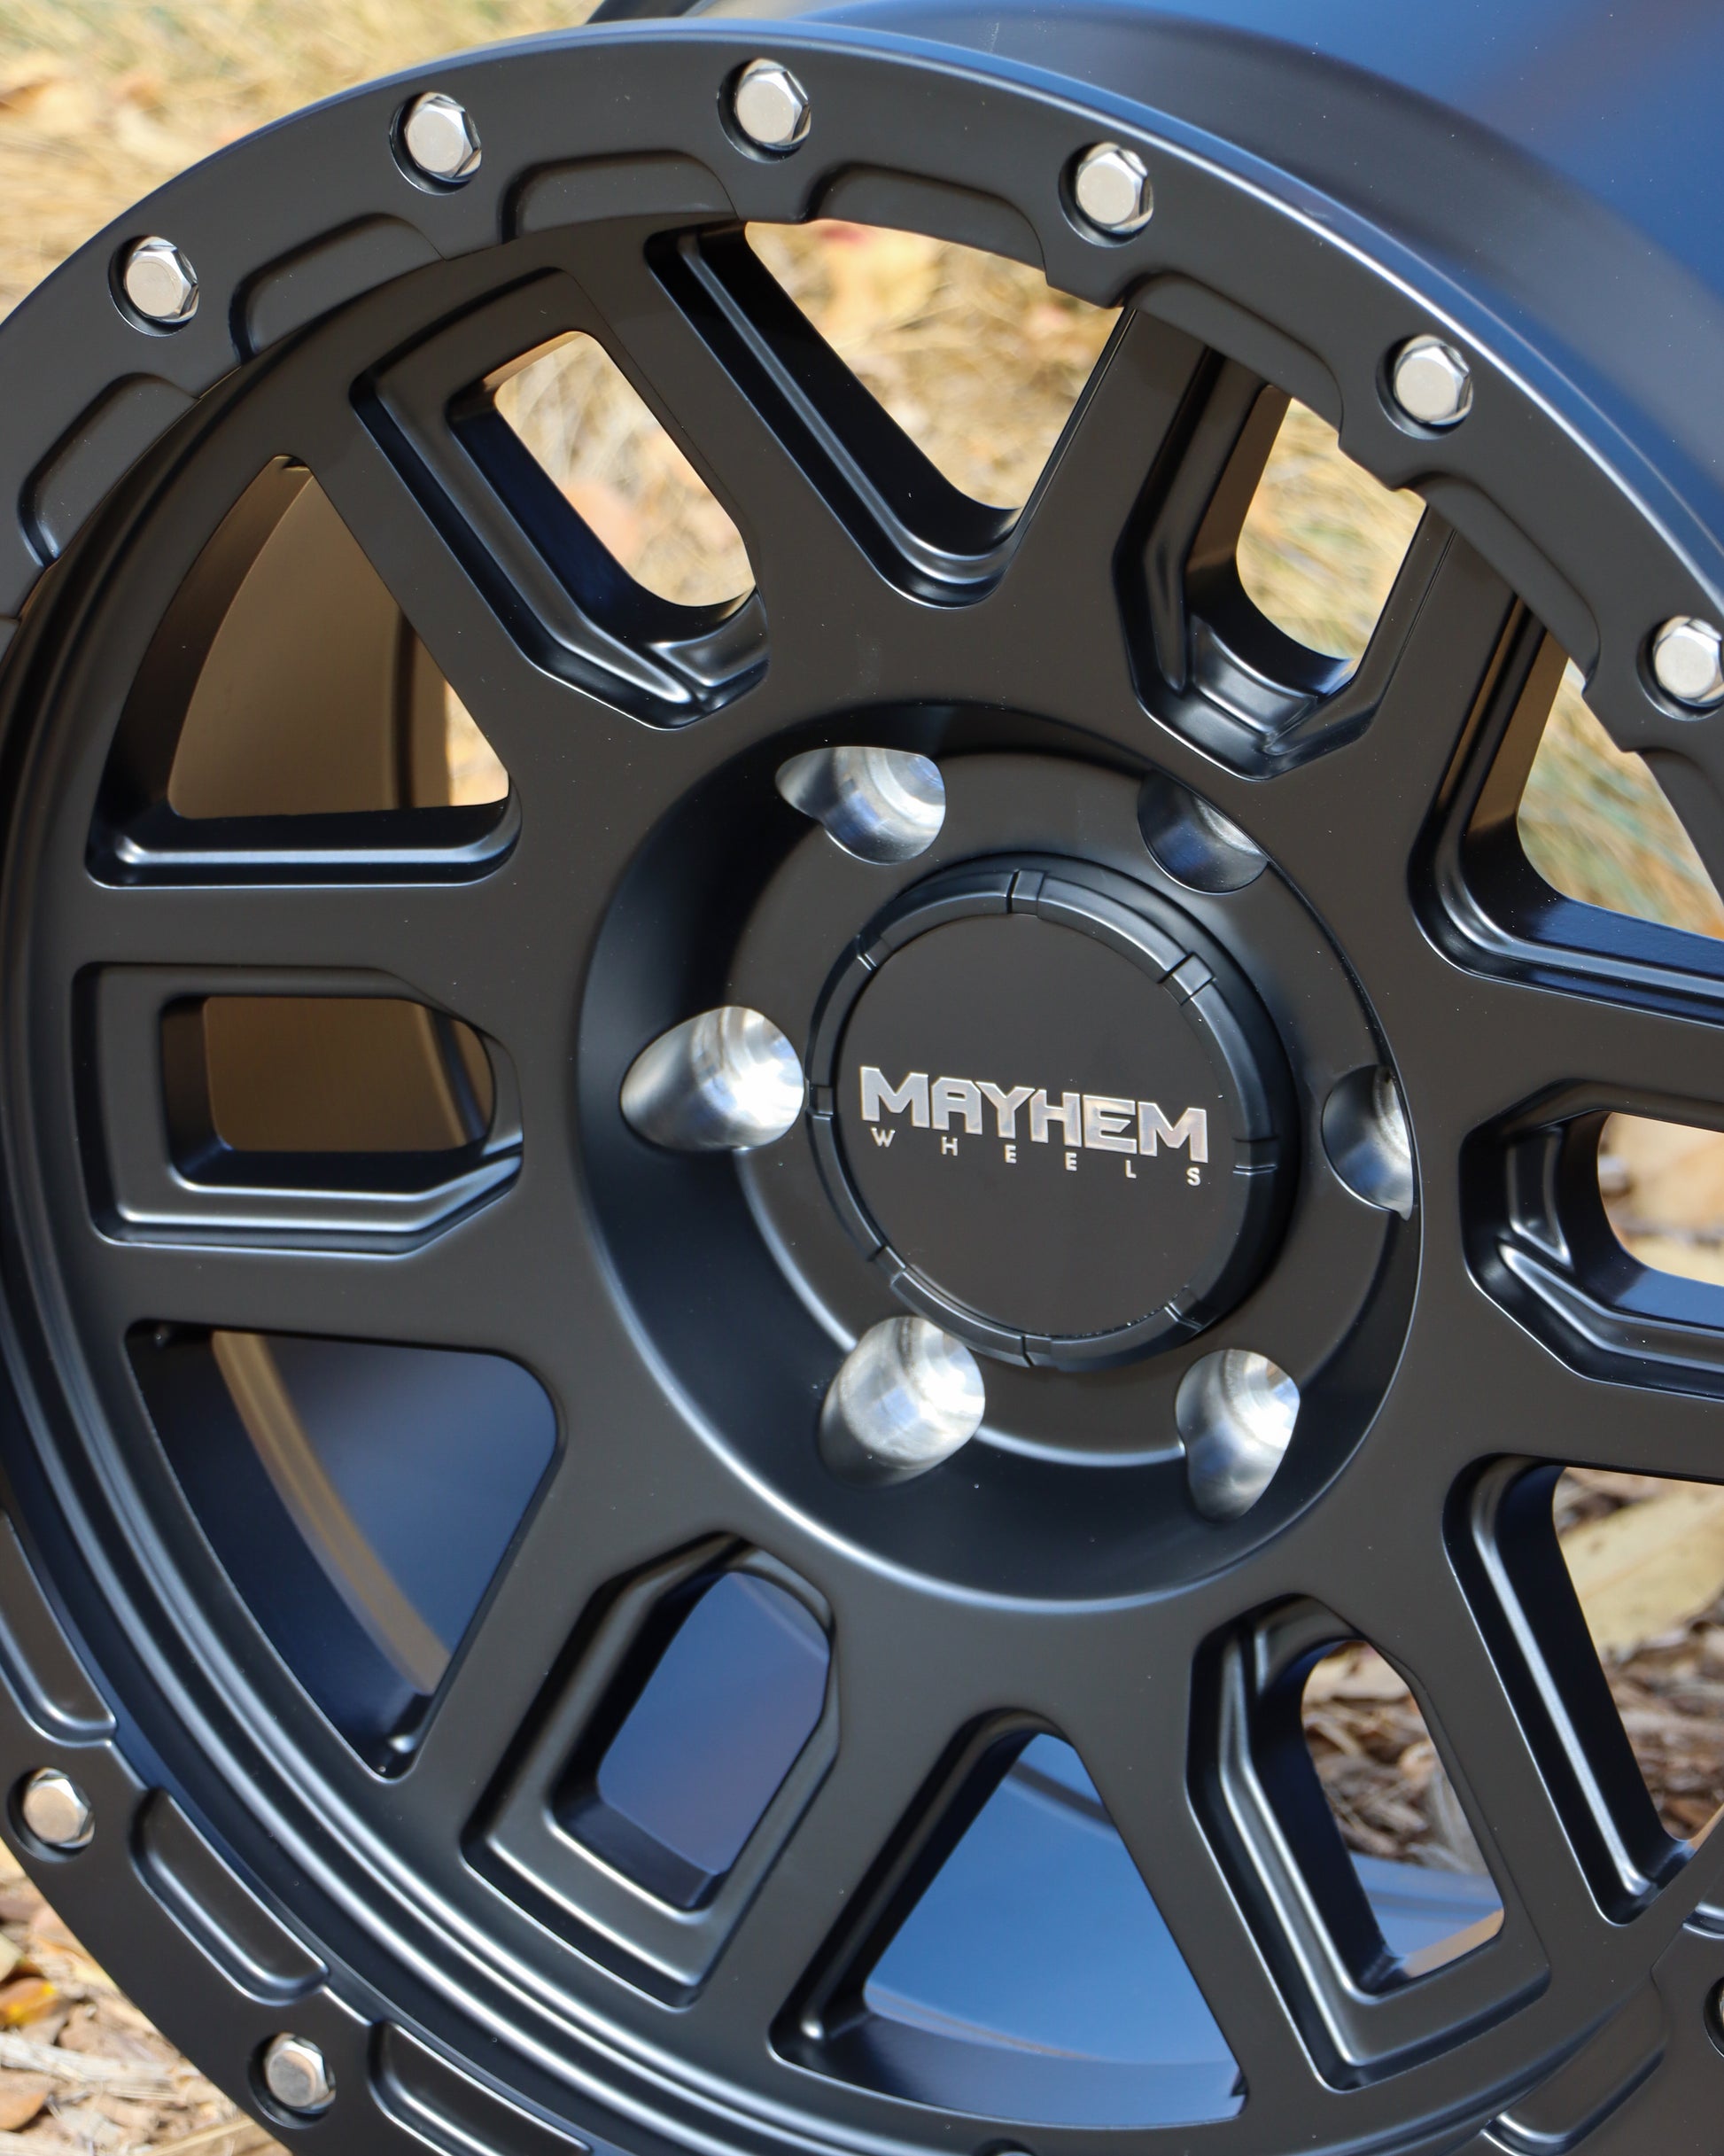 Close up of the mayhem delta wheel in a matte black finish.